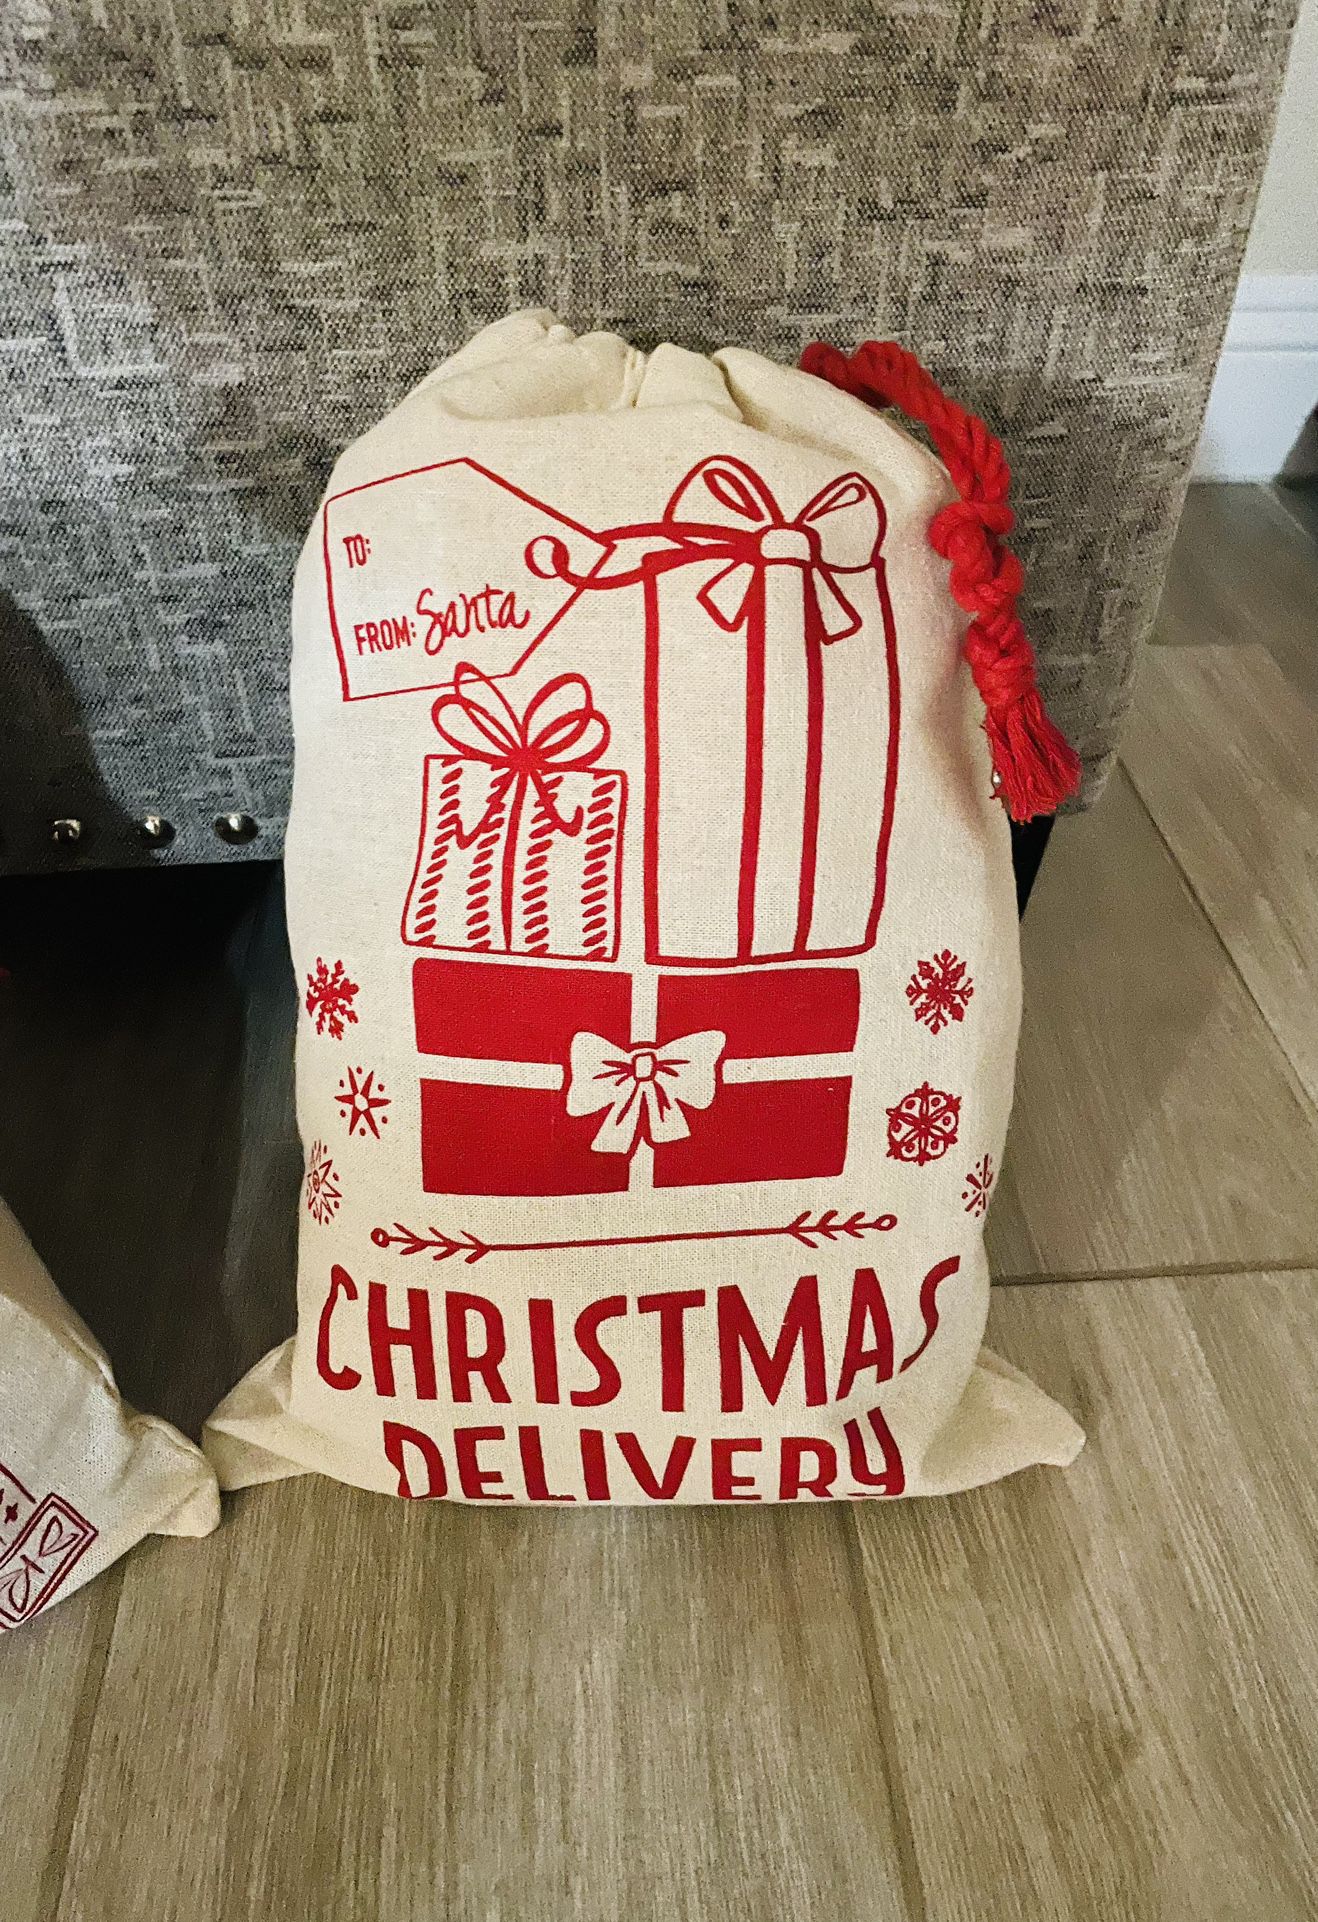 Delivery Santa Sacks 🎅 🎁 🎄present/ Christmas/santa/ Present Bags